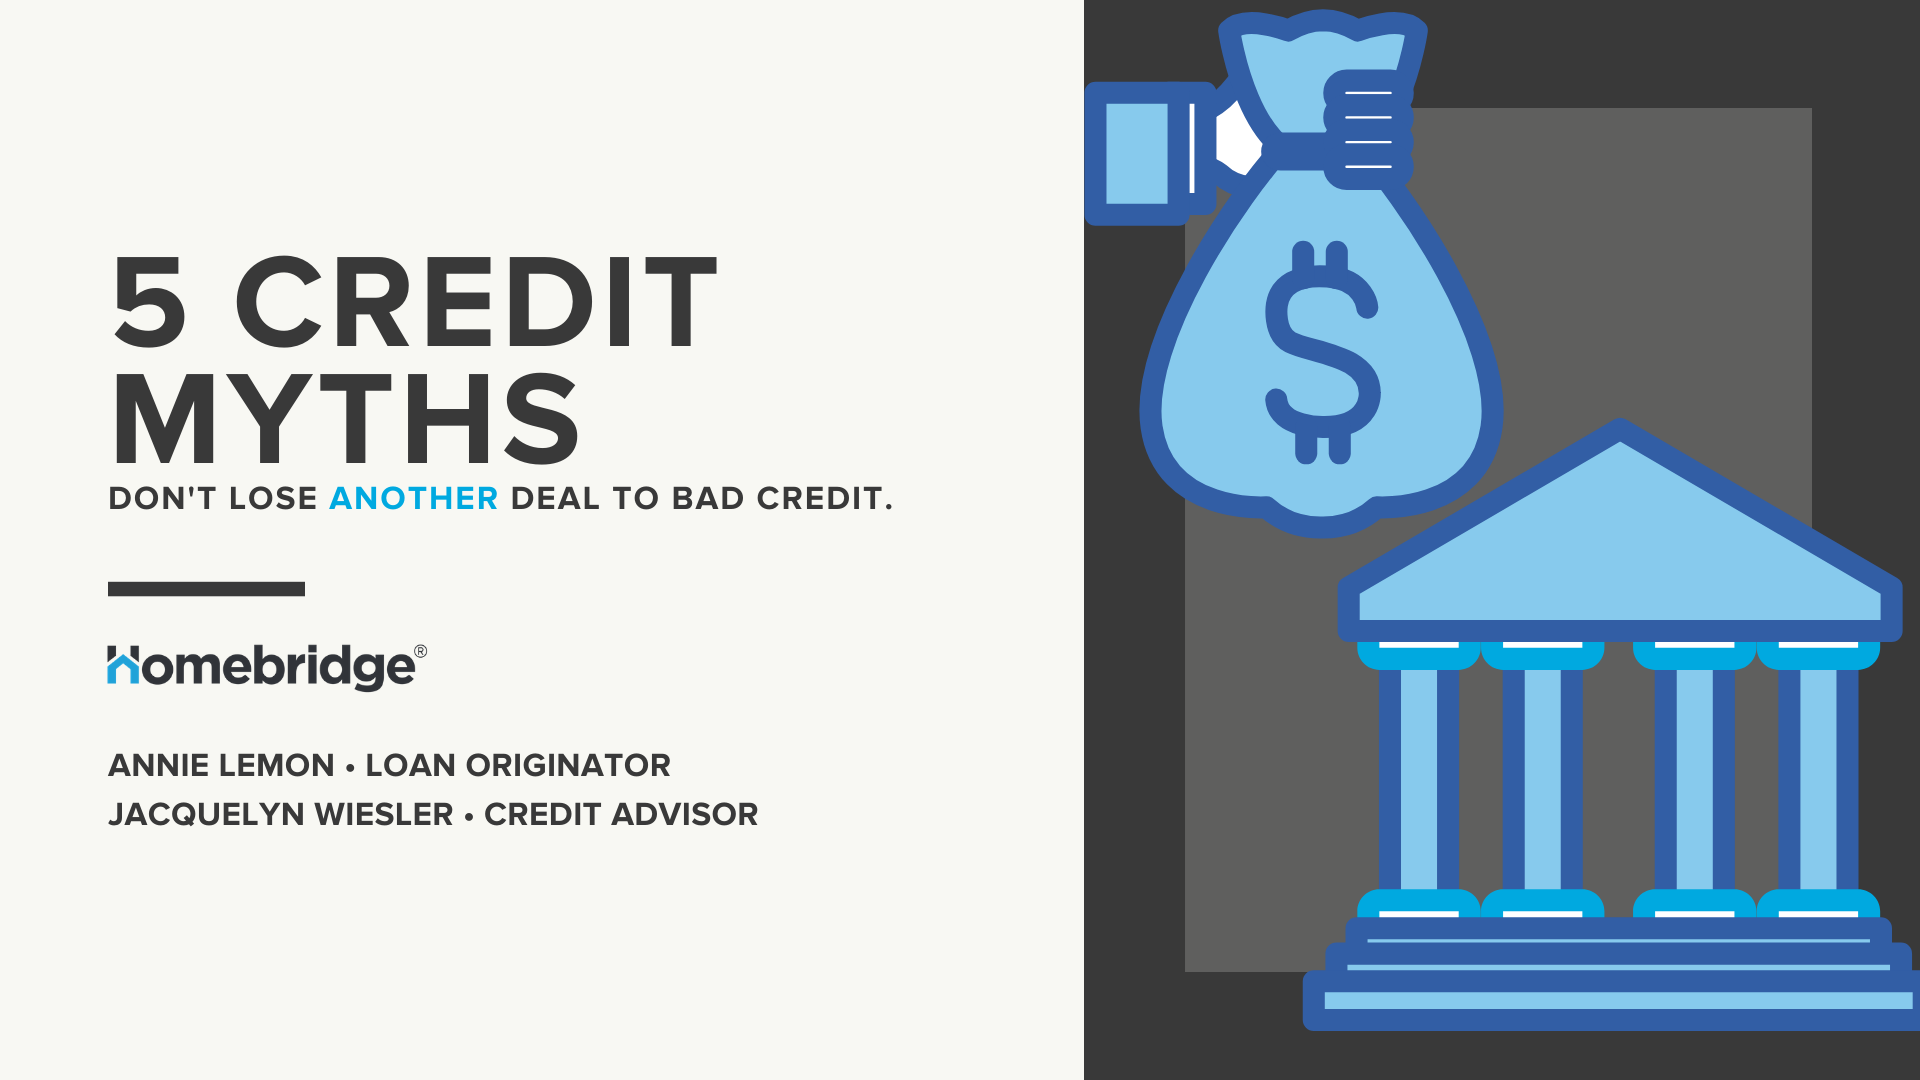 5 Credit Myths